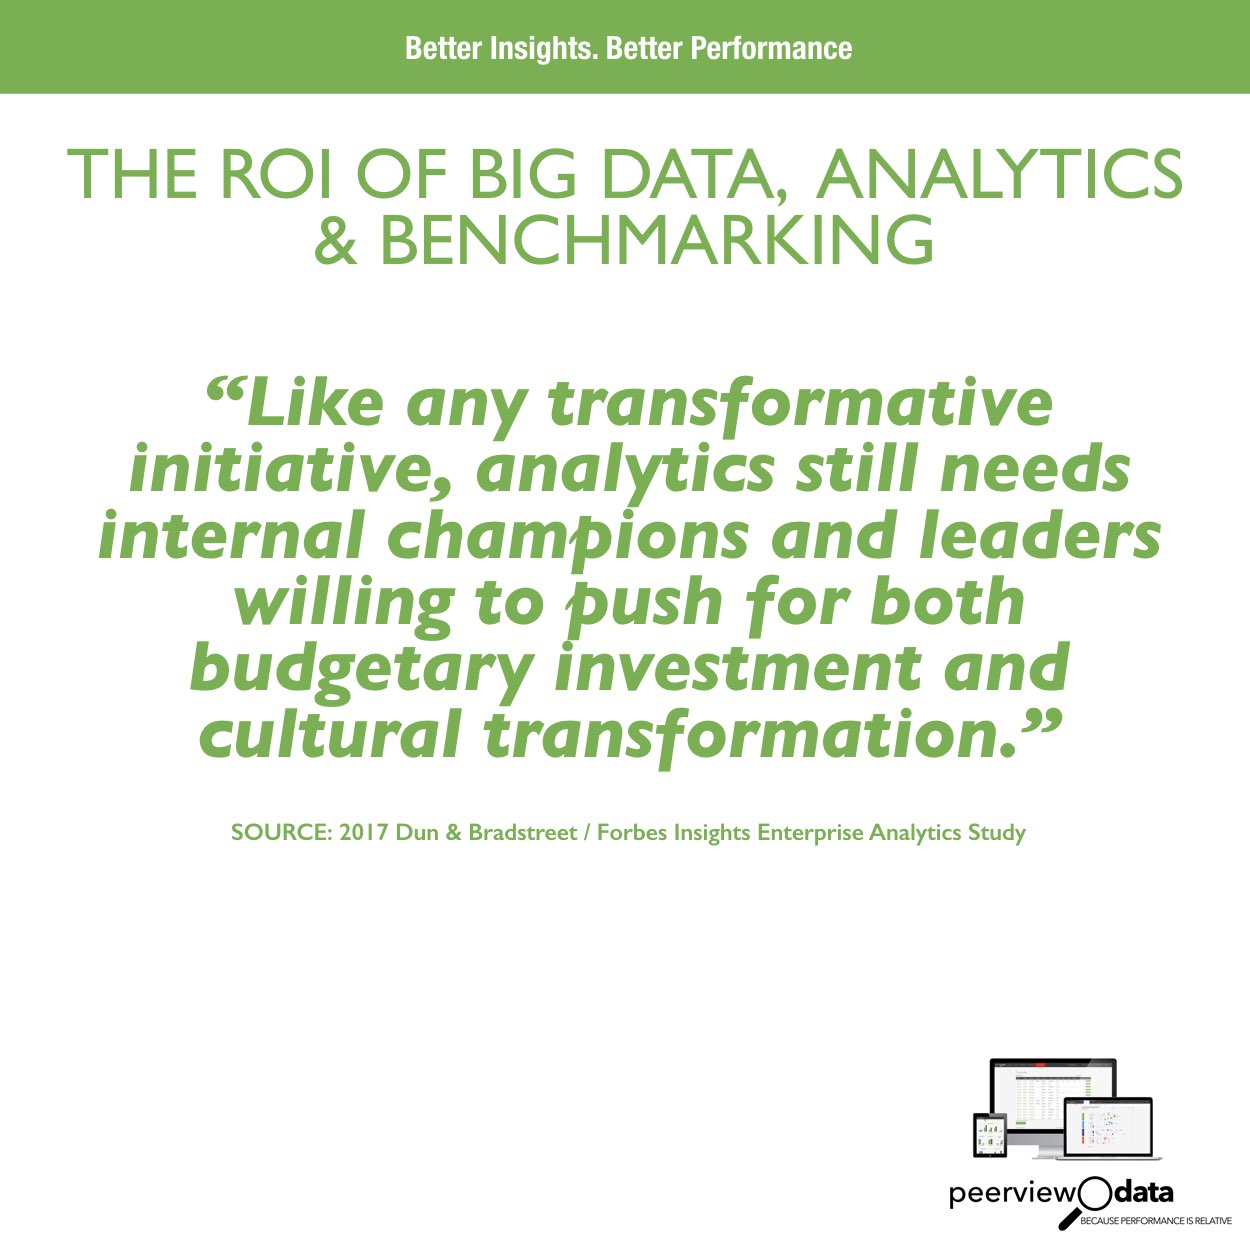 The ROI of Big Data, Analytics & Benchmarking #34